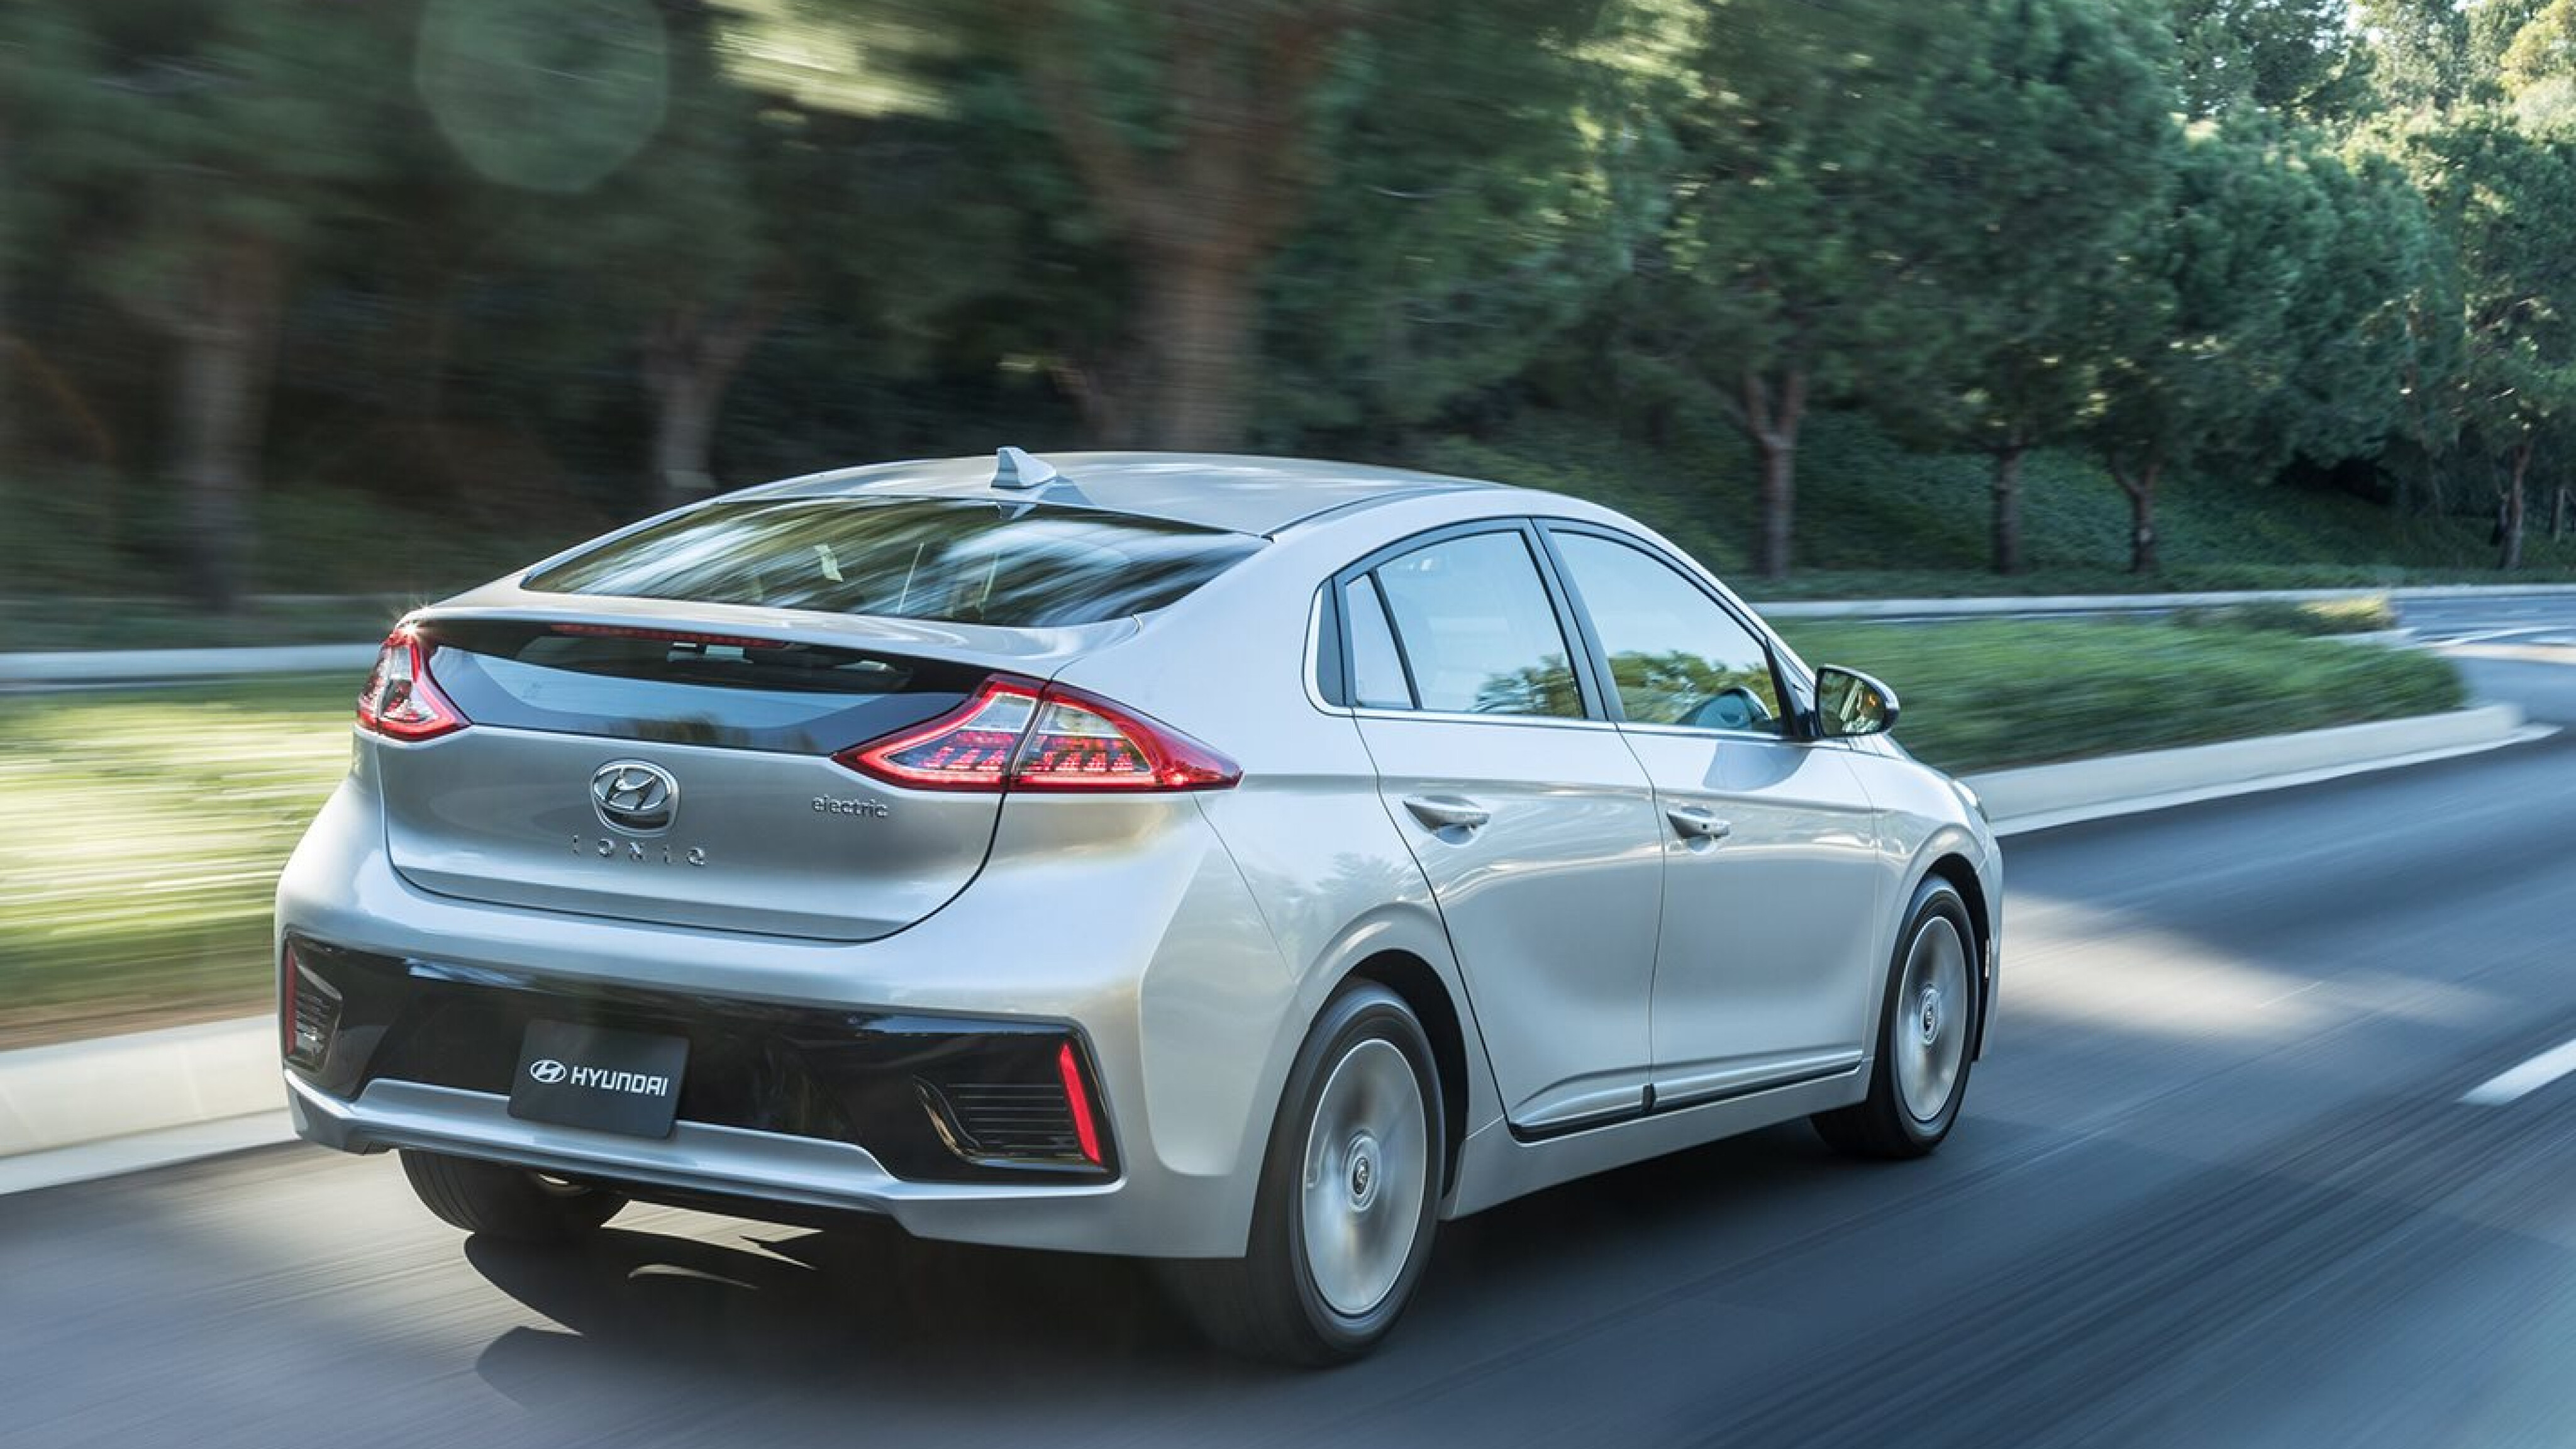 2018 Hyundai Ioniq Electric review